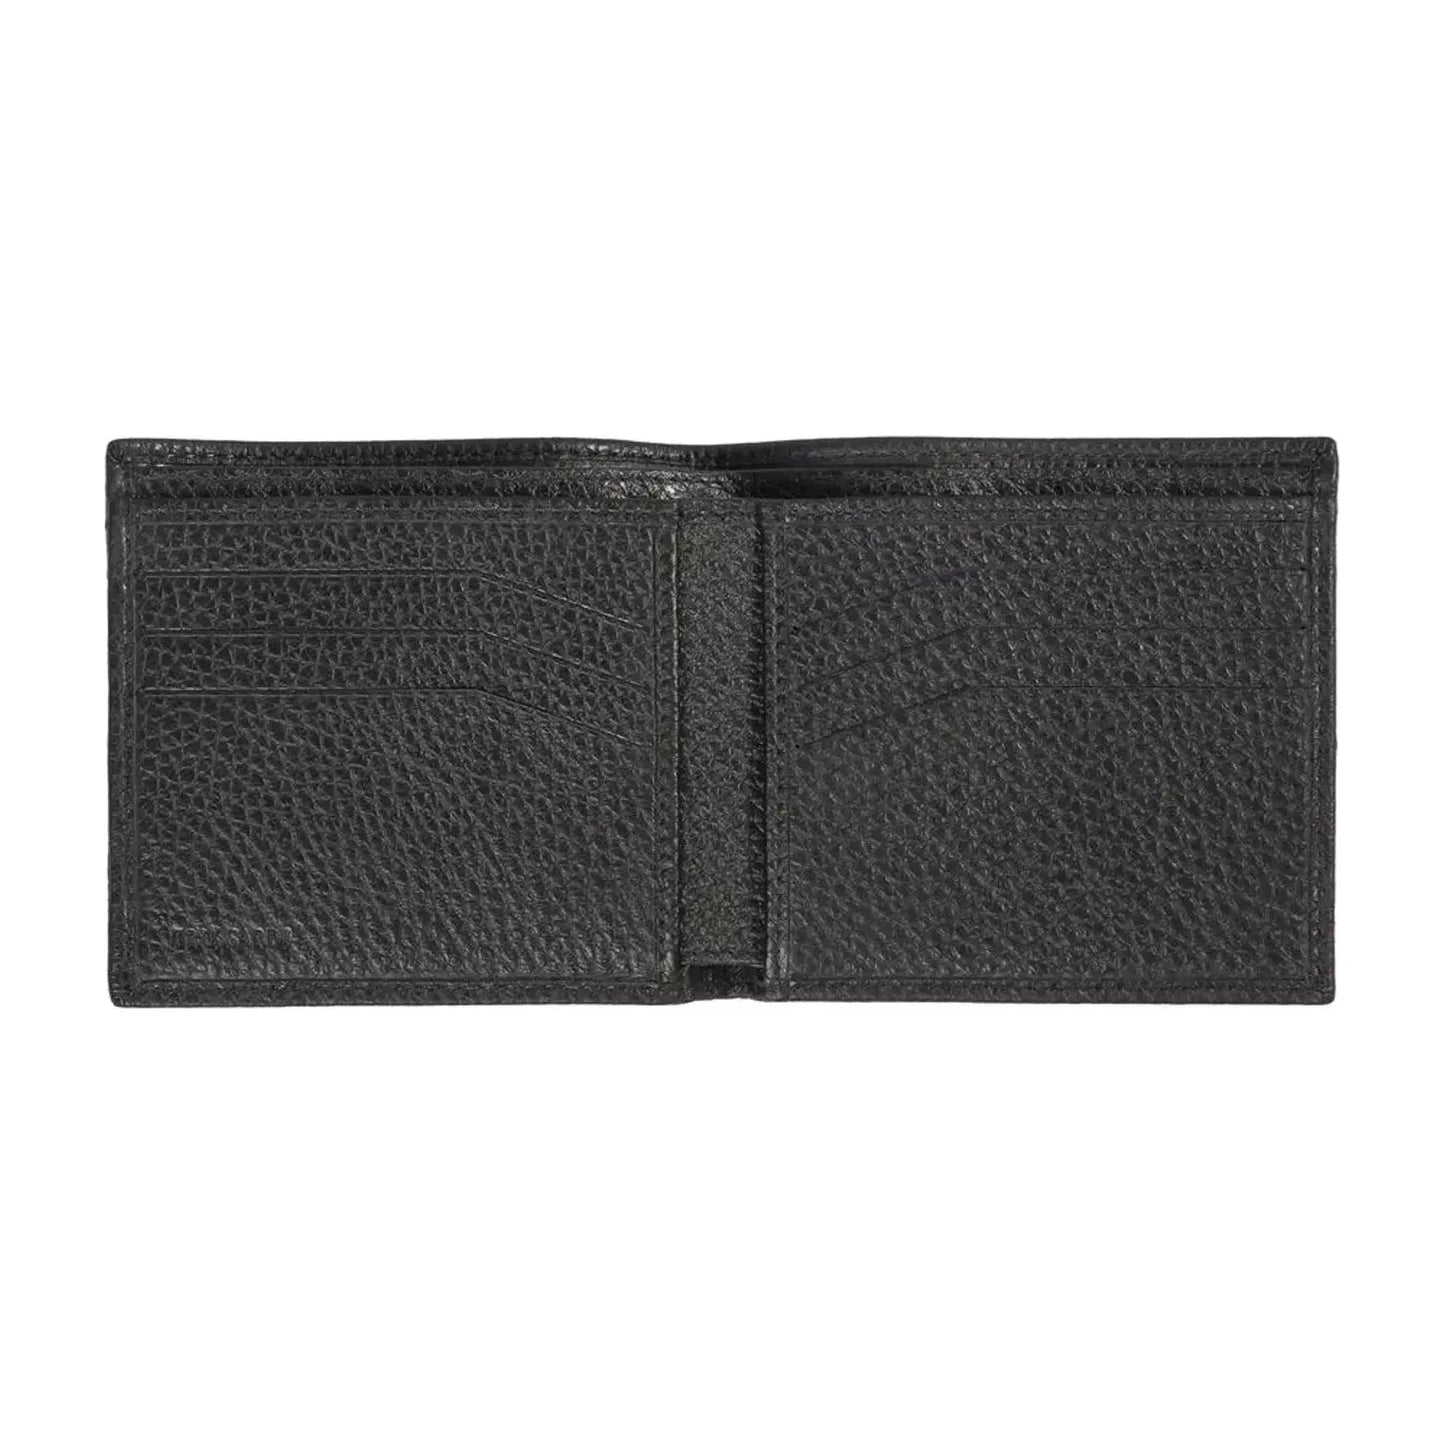 Trussardi Elegant Embossed Leather Men's Wallet black-leather-wallet-76 stock_product_image_20725_2138253925-16-90012584-910.webp